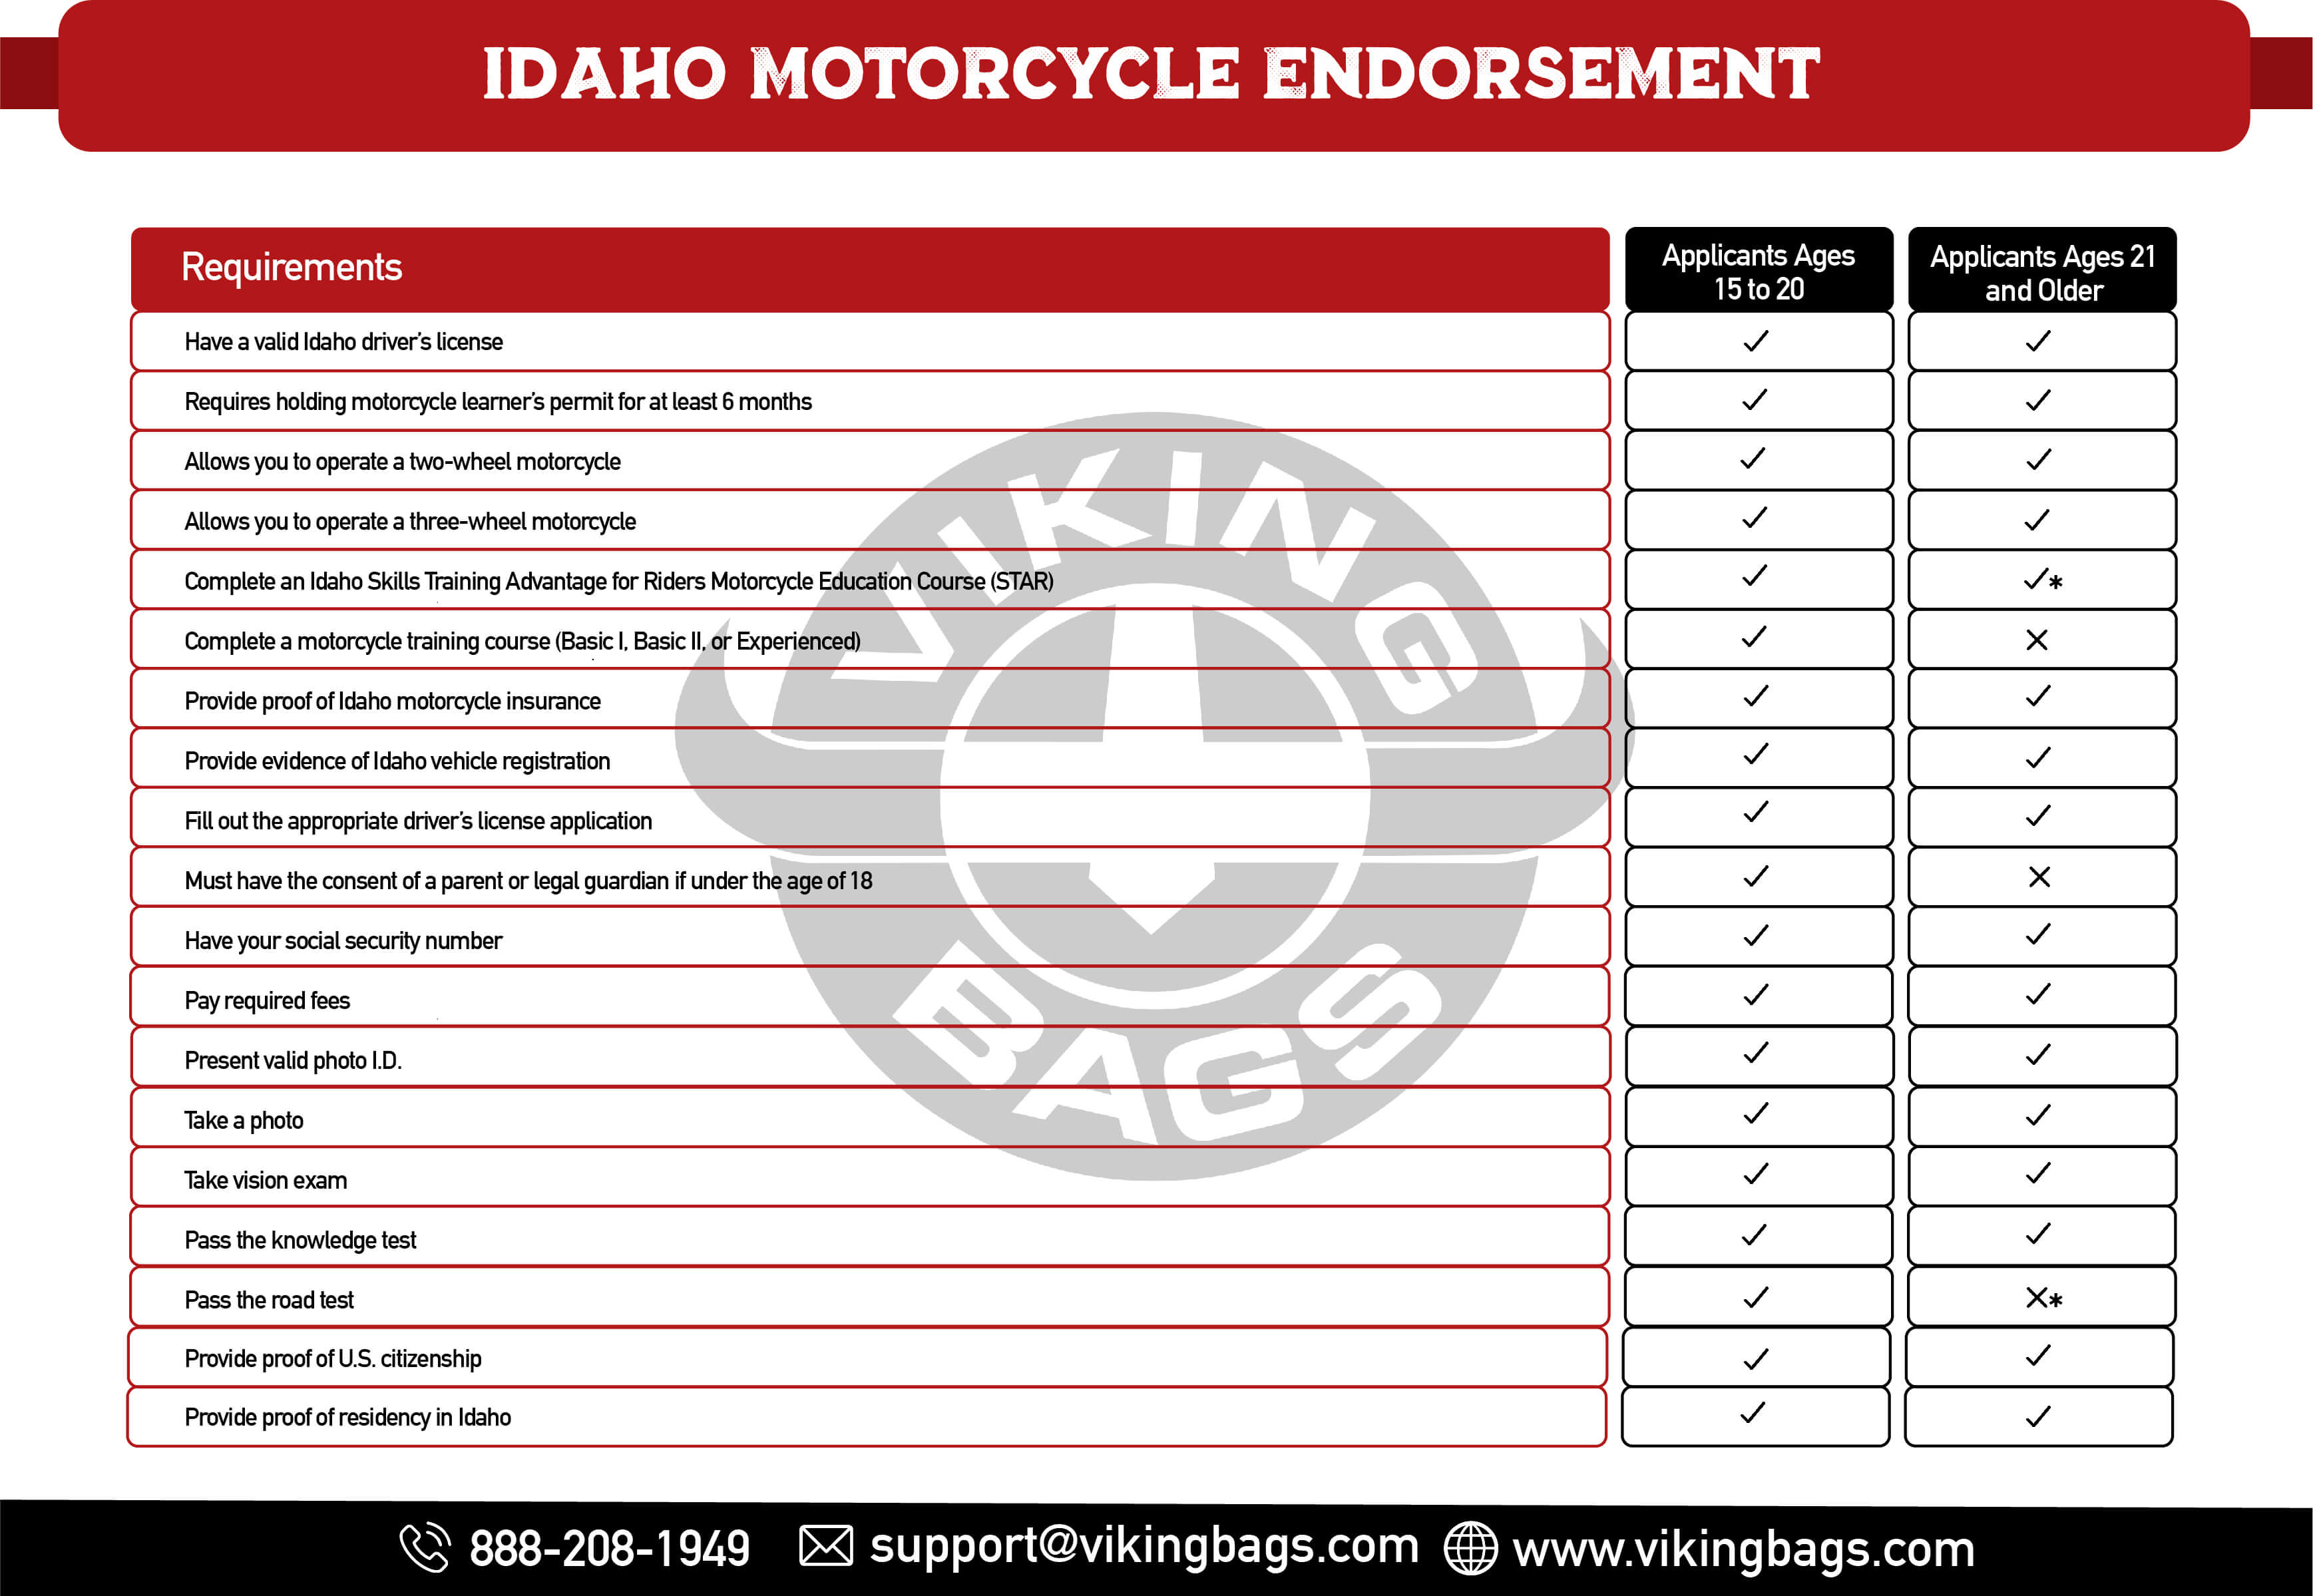 Requirements for an Idaho MotorcycleEndorsement